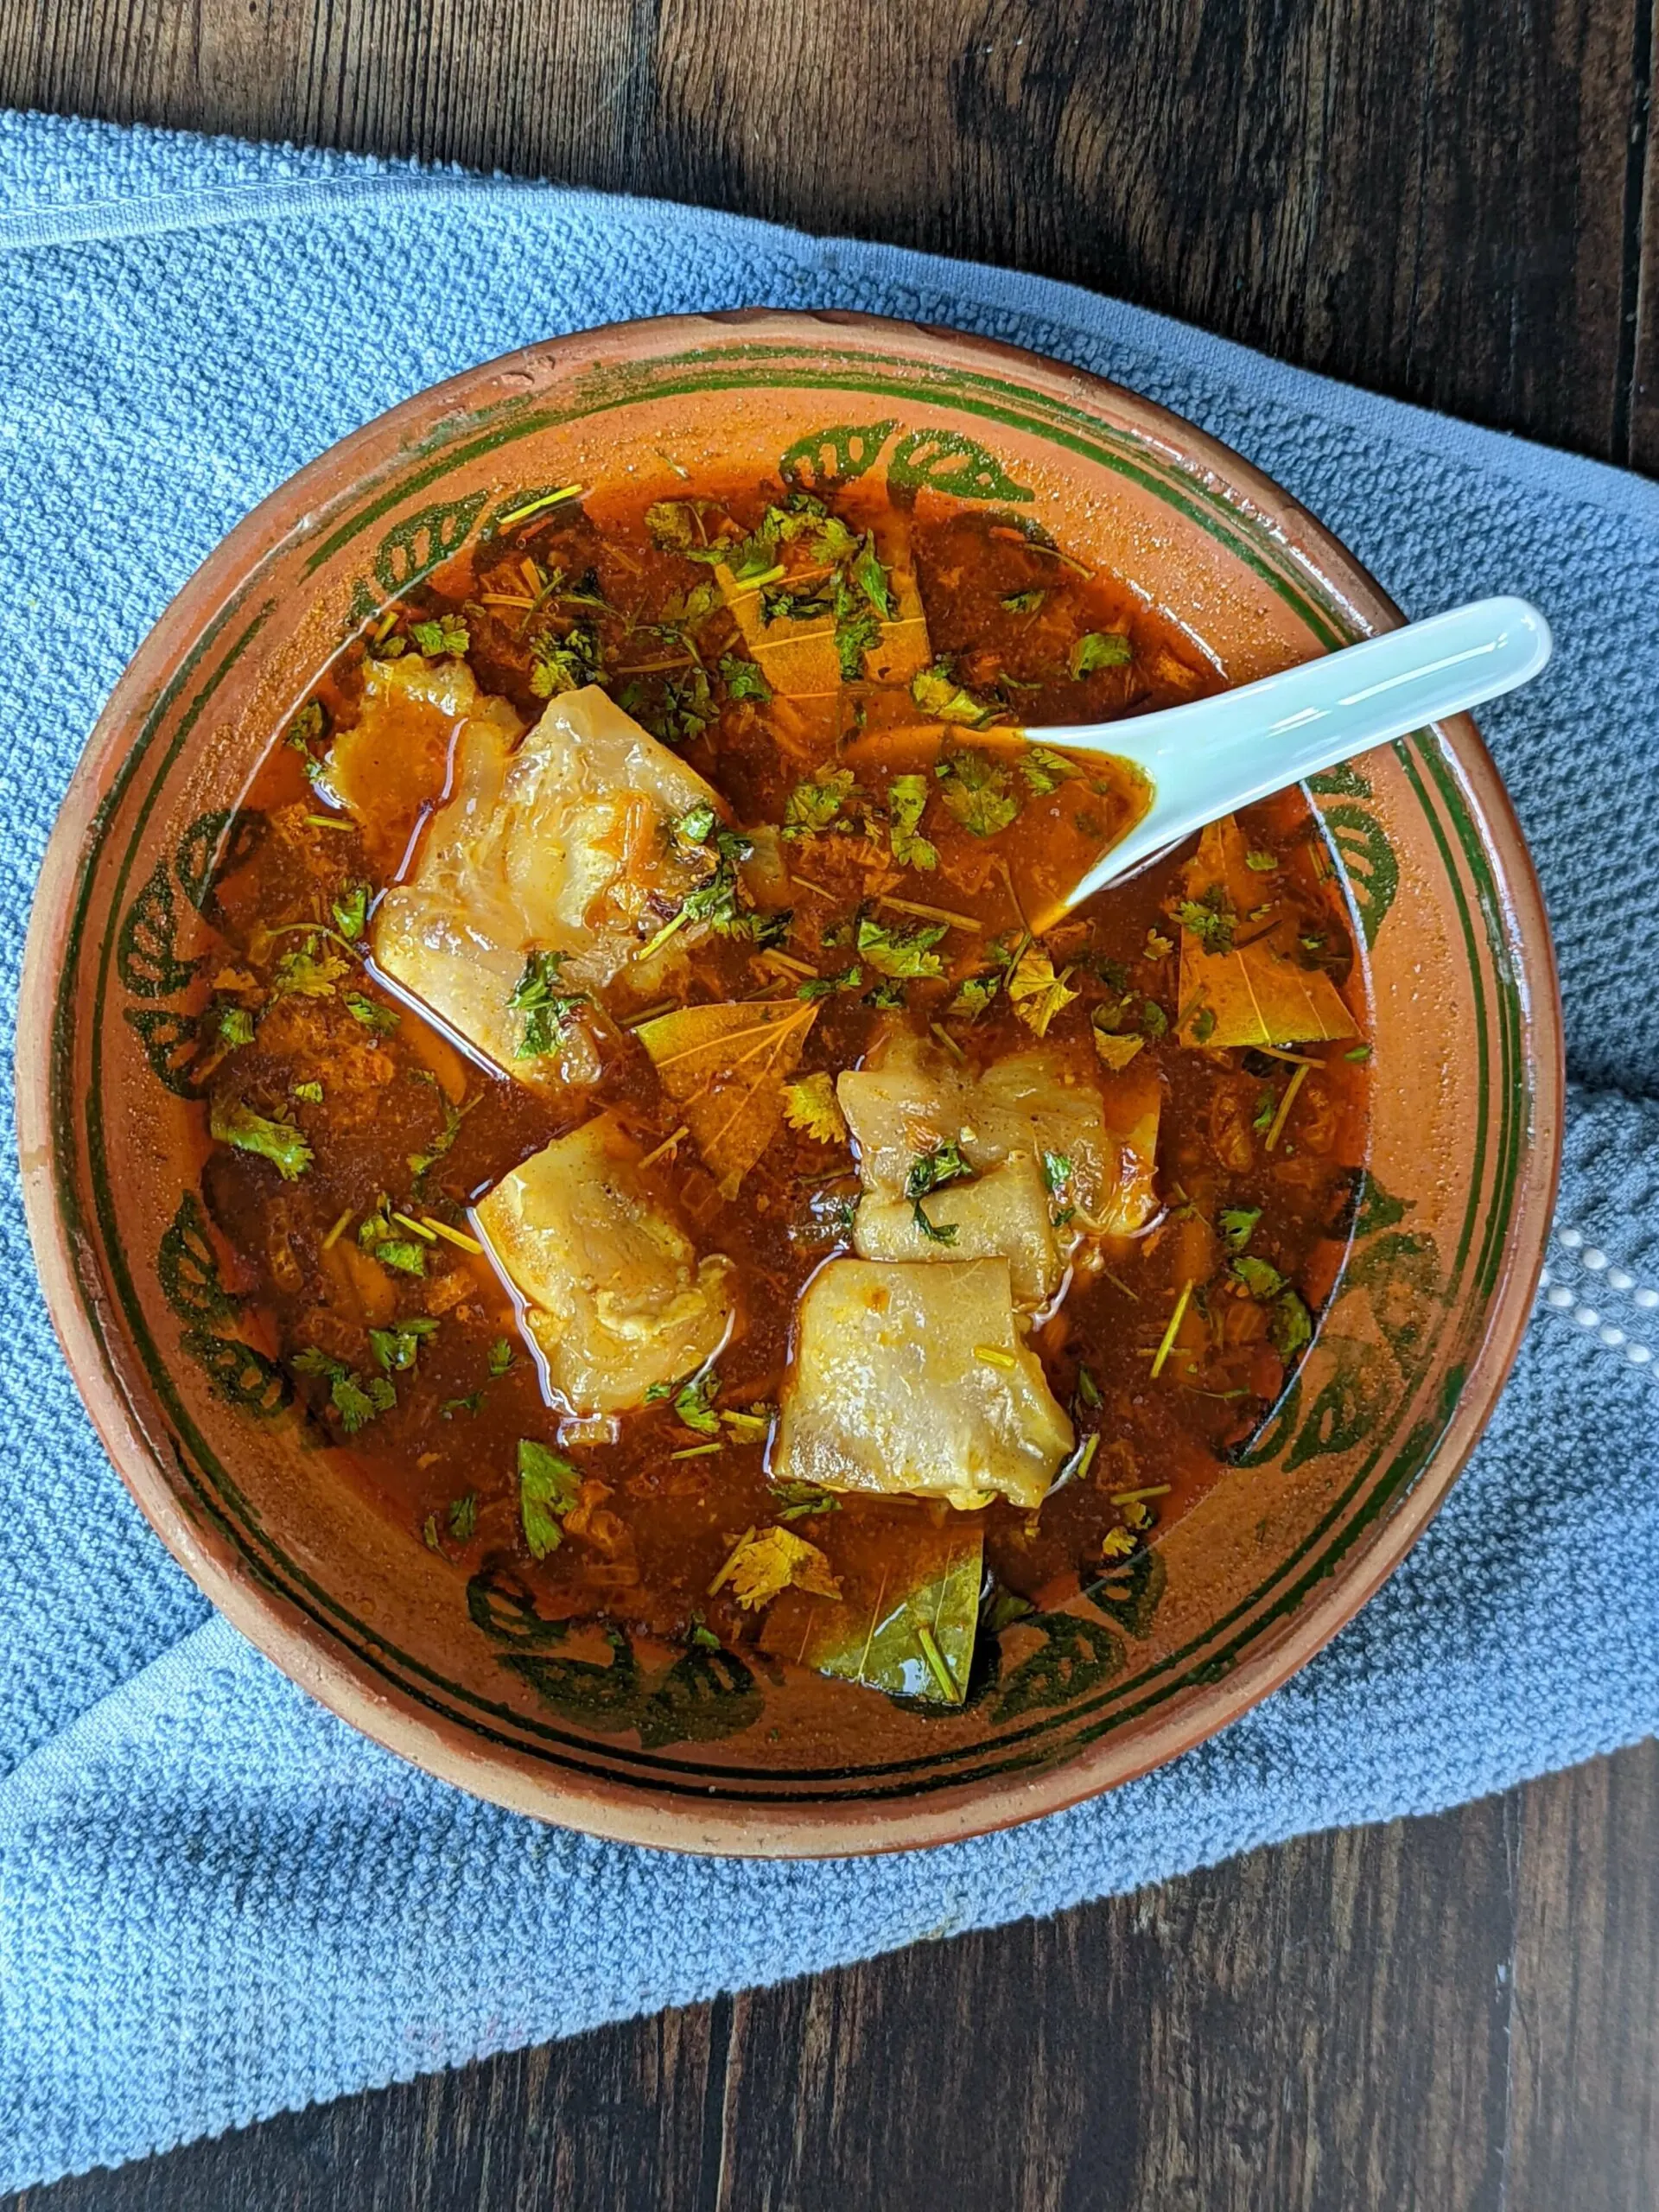 A bowl of paya soup topped with fresh cilantro.